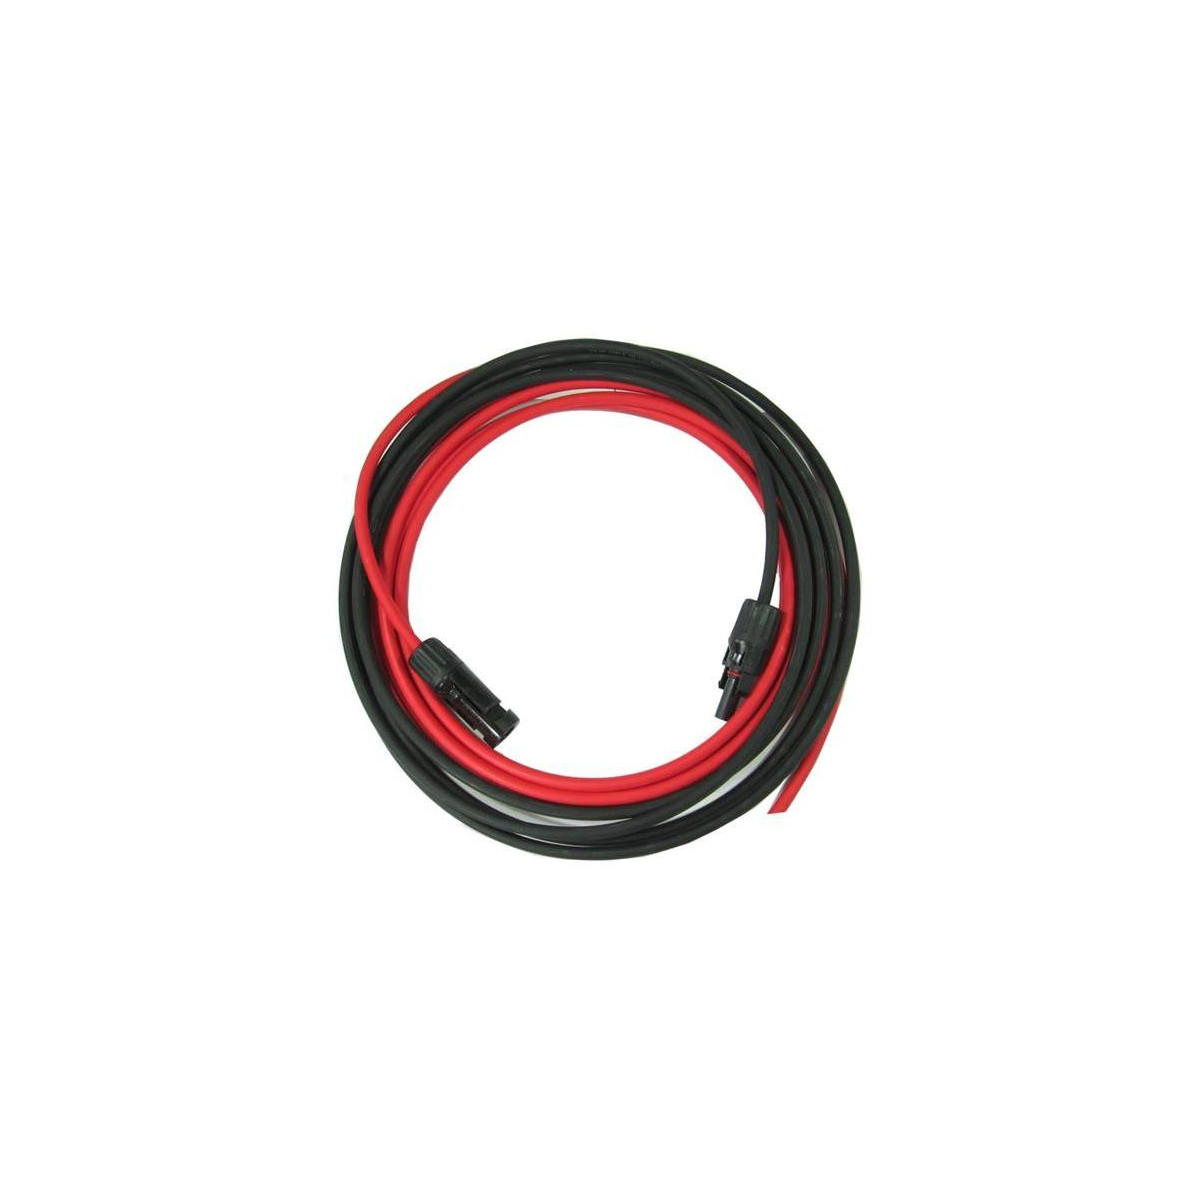 Viac oSolární kabel 4mm2, červený+černý s konektory MC4, 10m